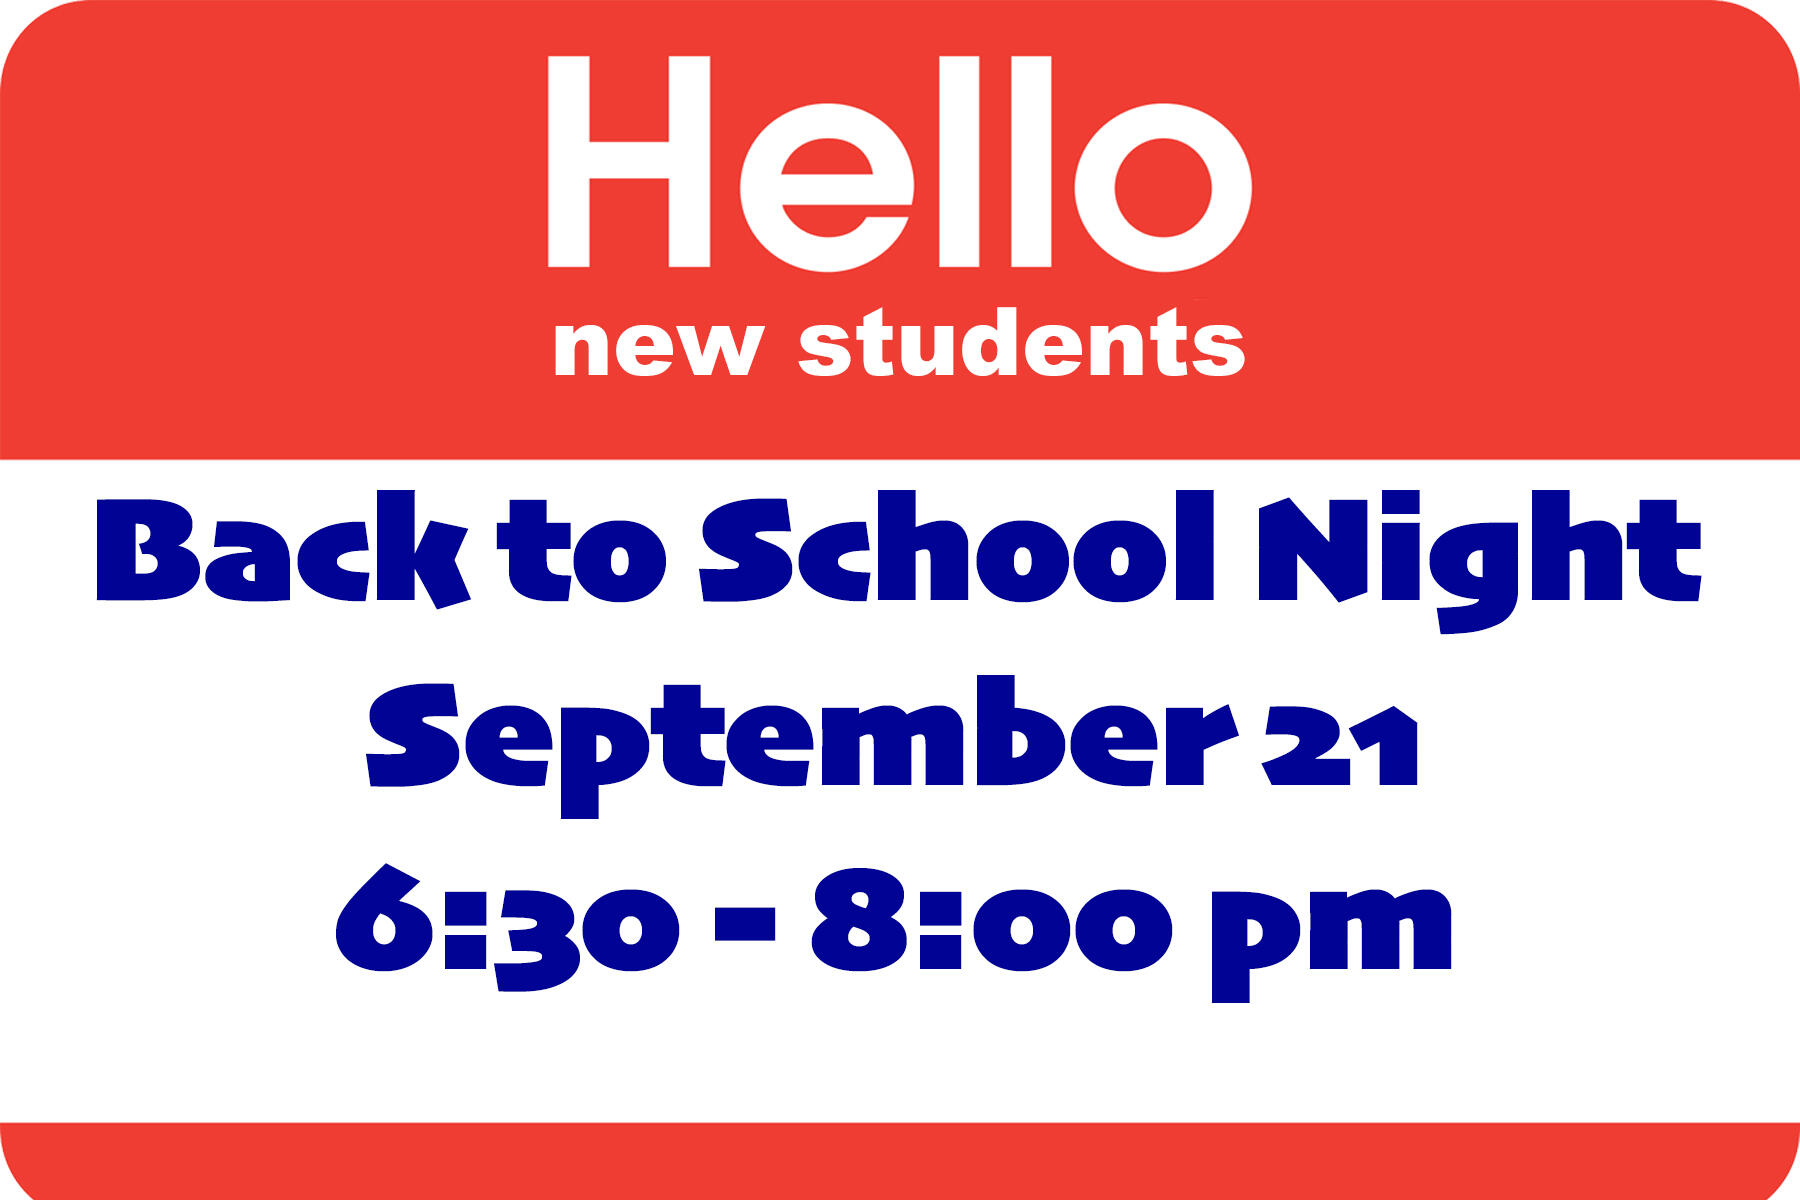 Back to school night September 21 6:30 -8